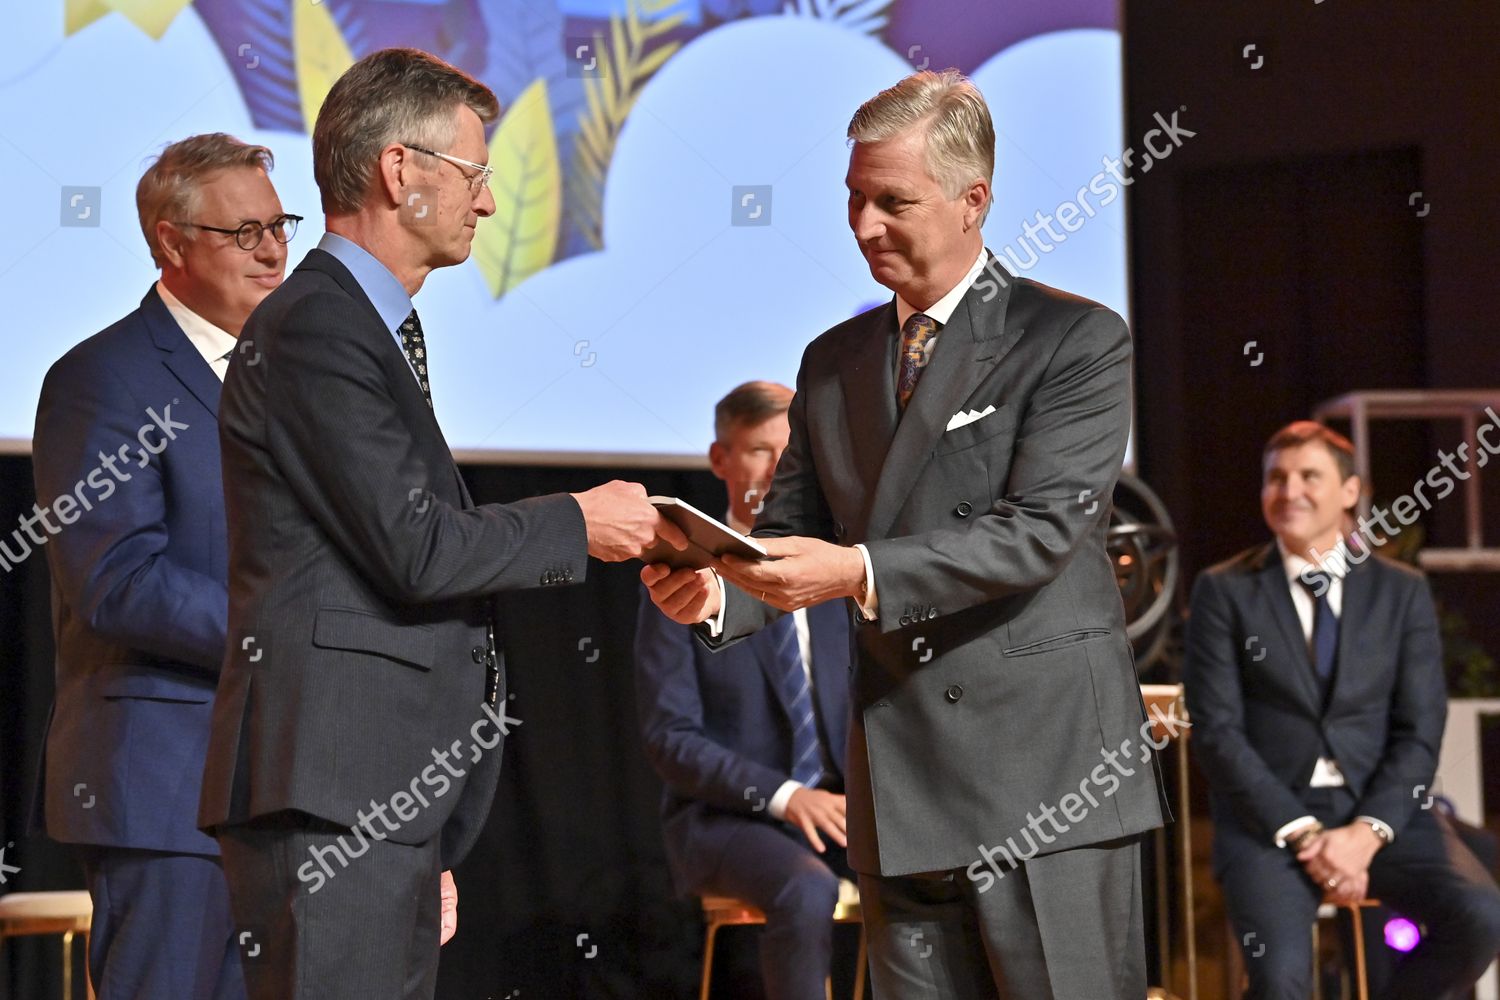 science-royals-scientific-excellence-awards-brussels-belgium-shutterstock-editorial-12523234h.jpg